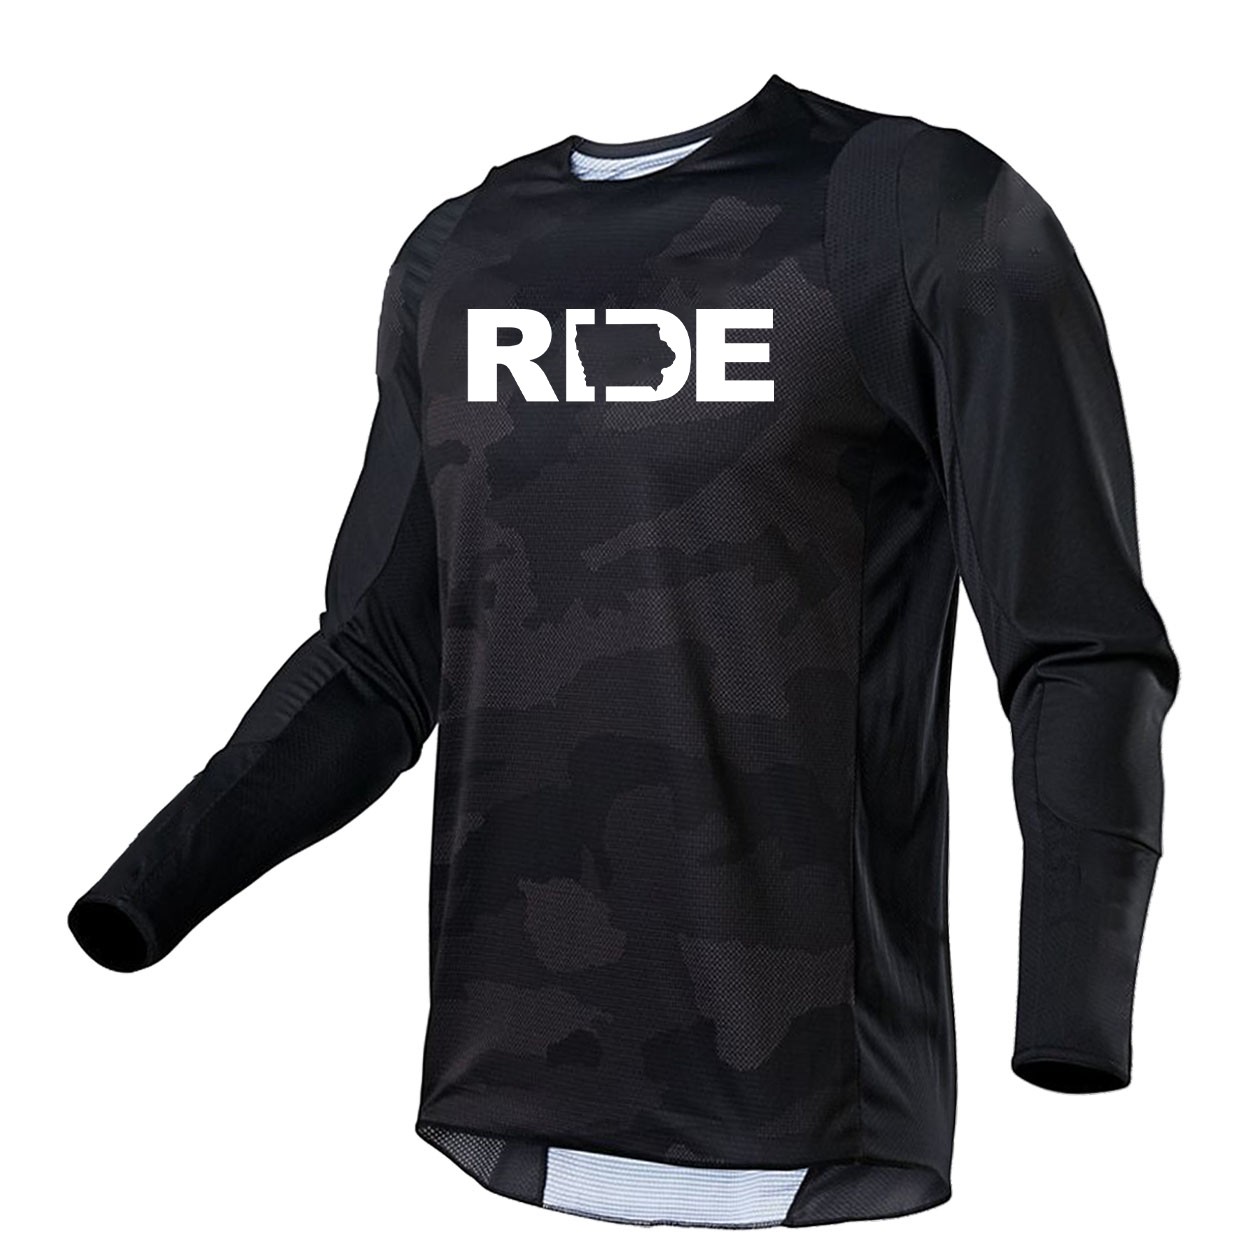 Ride Iowa Classic Performance Jersey Long Sleeve Shirt Black Camo